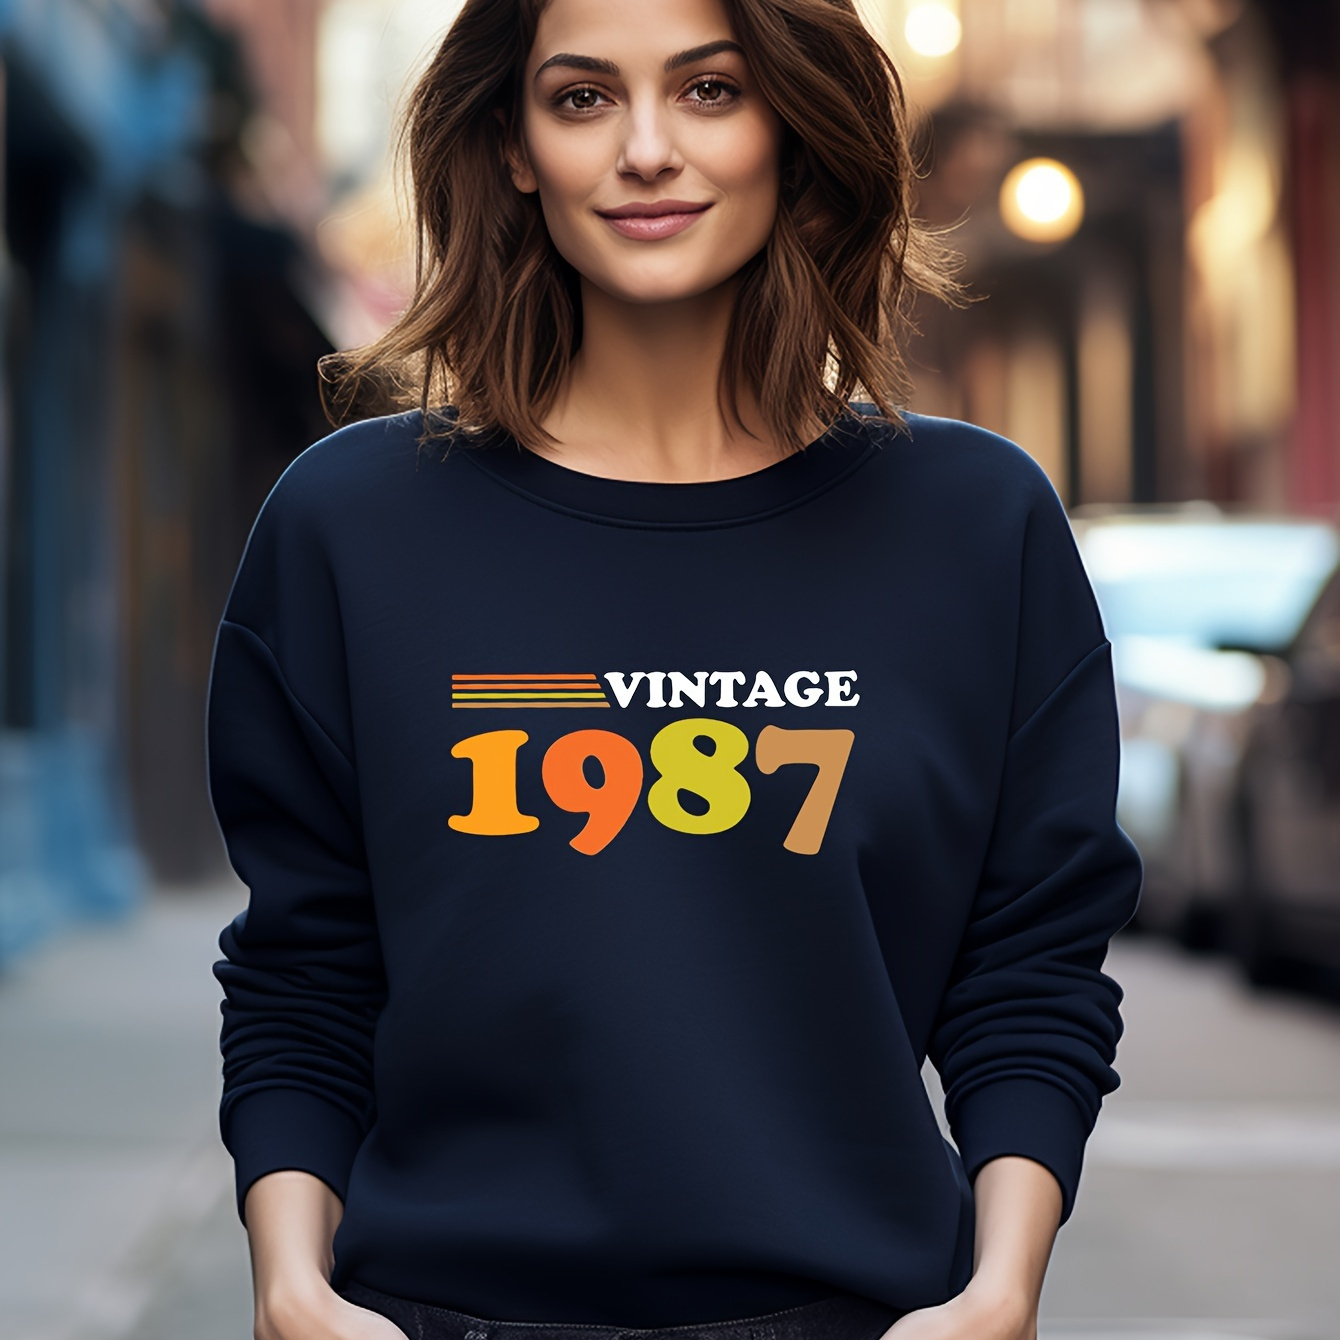 

Vintage 1987 Print Fleece Round Neck Sweatshirt, Versatile Long Sleeve Pullover Sports Sweatshirt, Women's Clothing